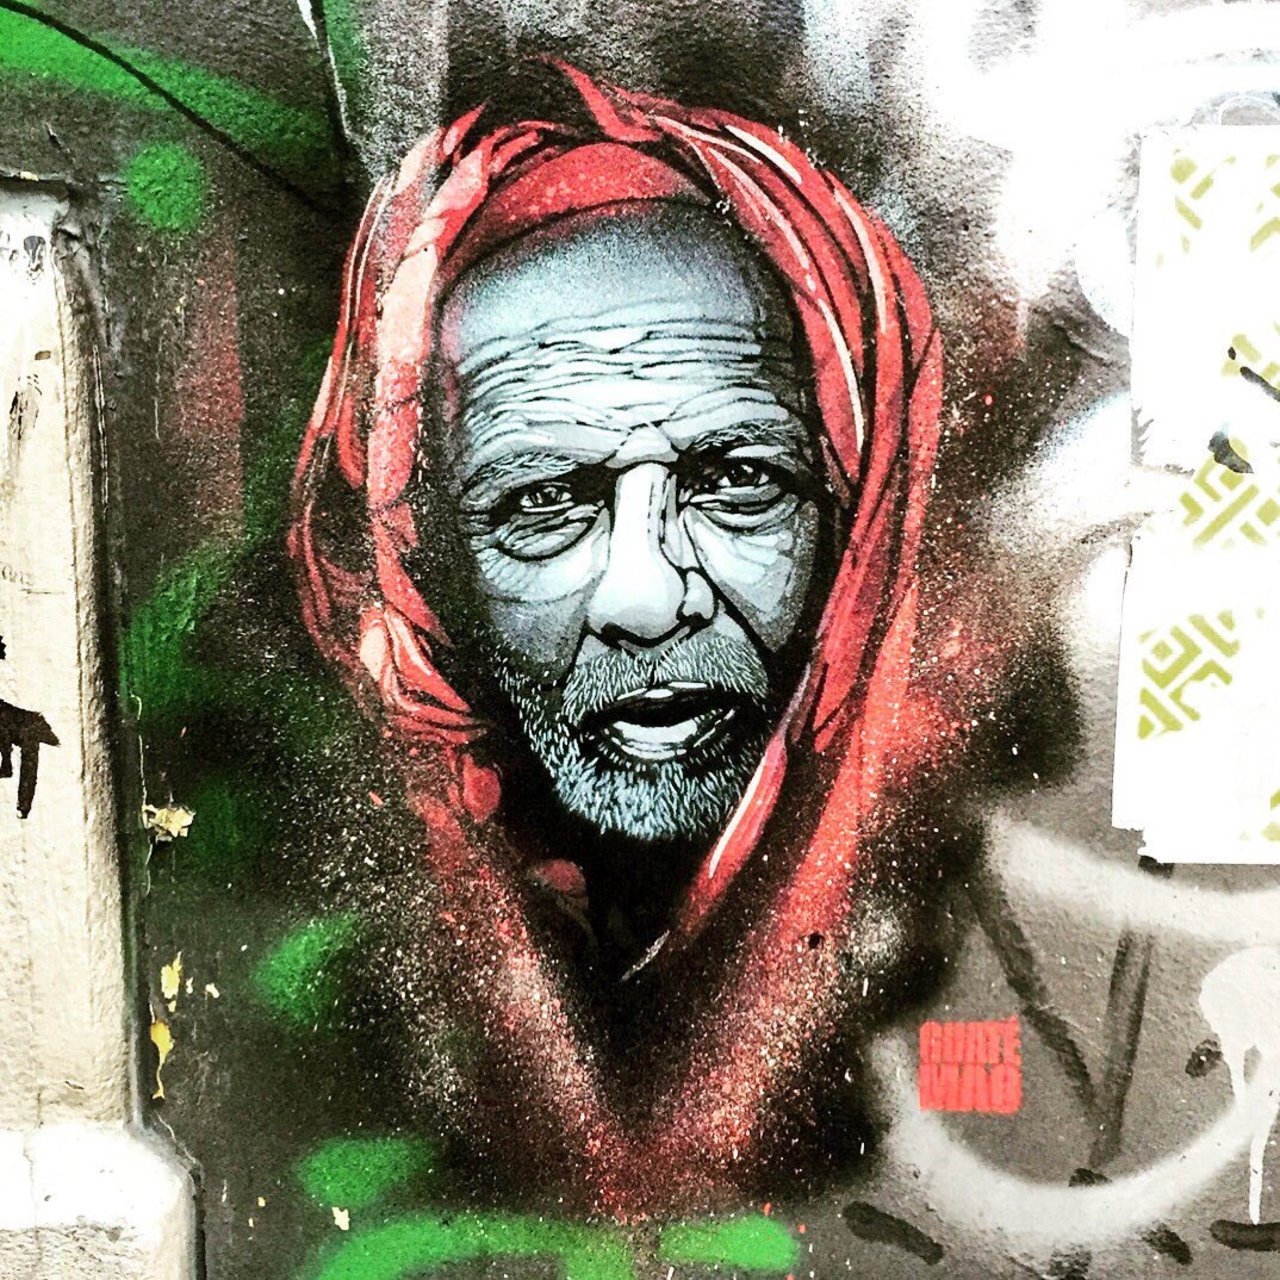 Old man by #guatemao #streetart #graffiti #graffitiart #spray #spraypaint #urbanart #nirindastreet #paris https://t.co/bBz5t9wGyg